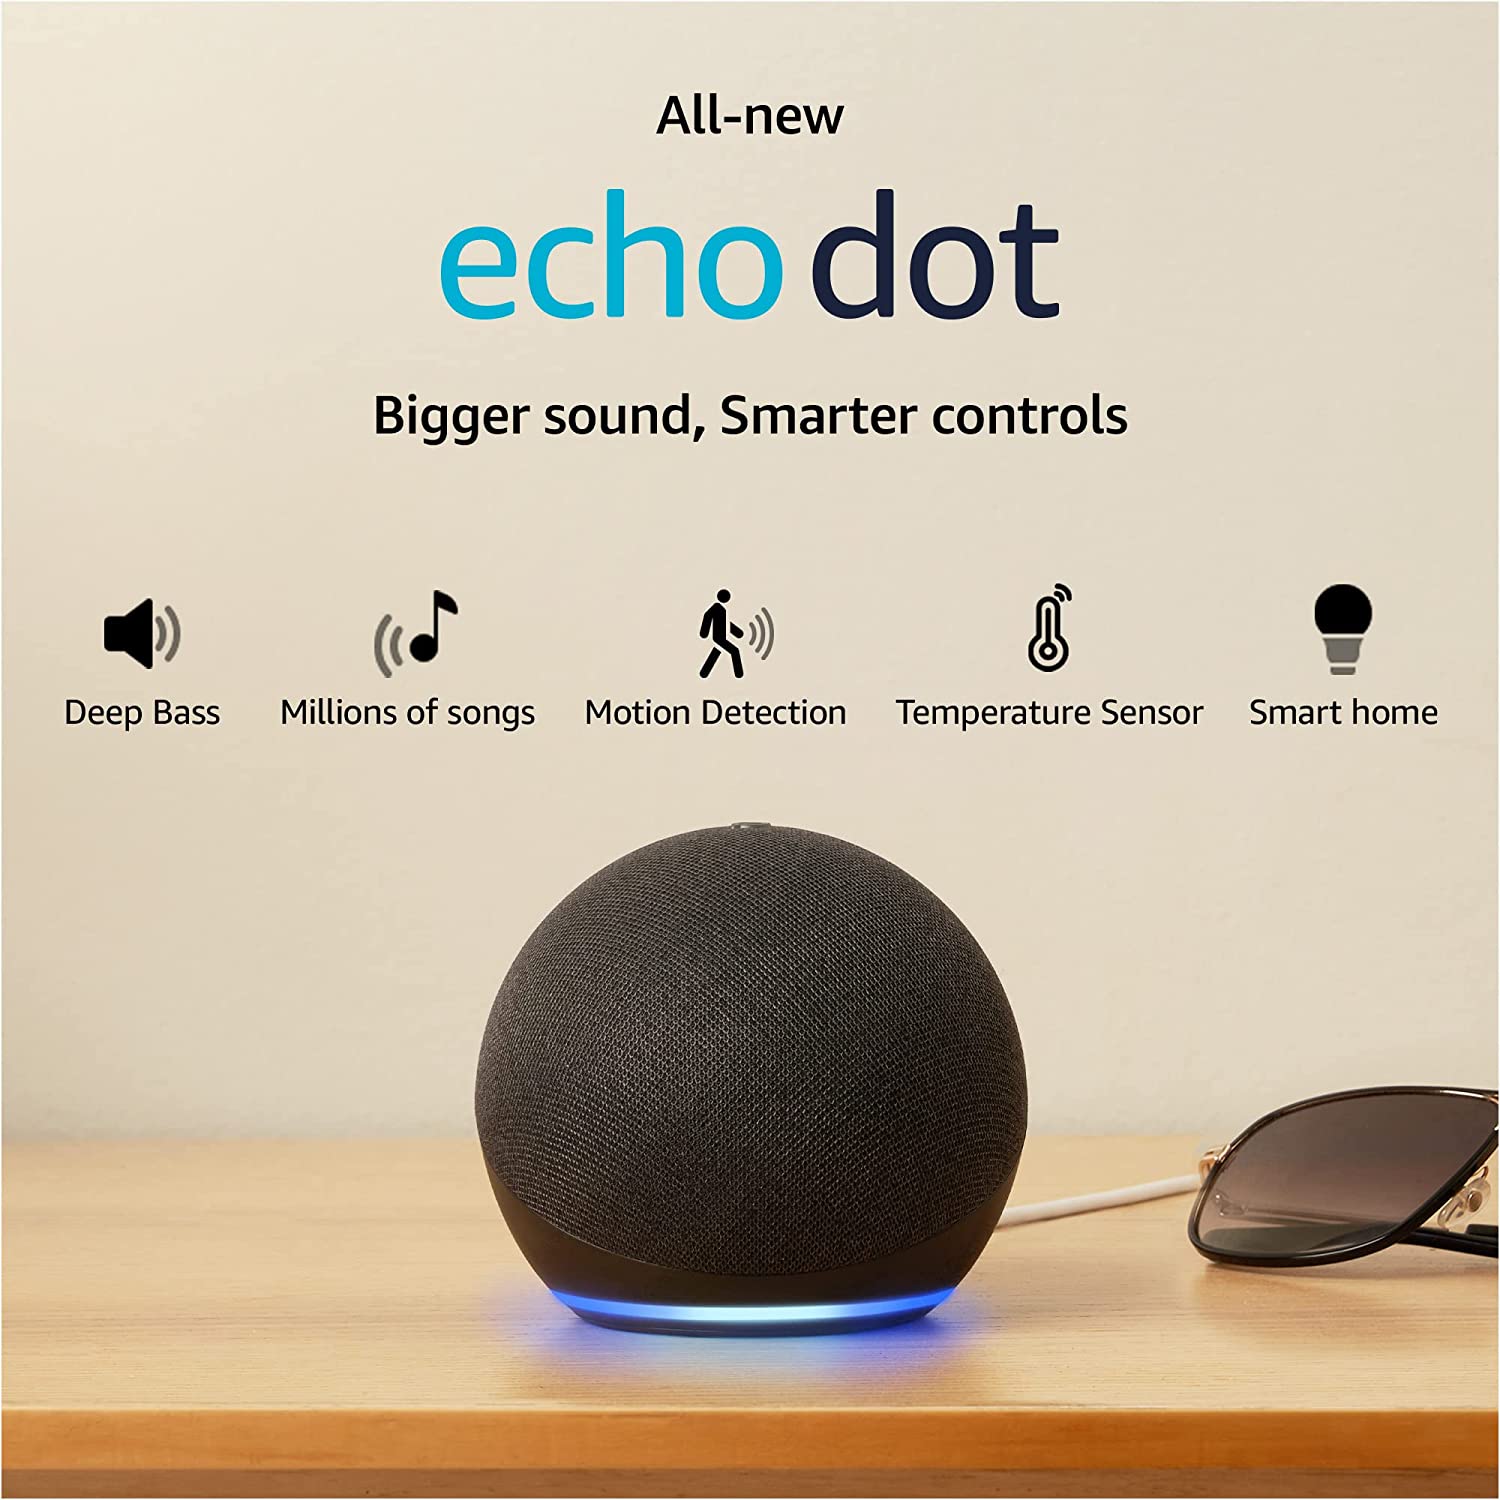 All new Echo Show 5 (2nd Gen) - Smart speaker with 5.5 screen, crisp